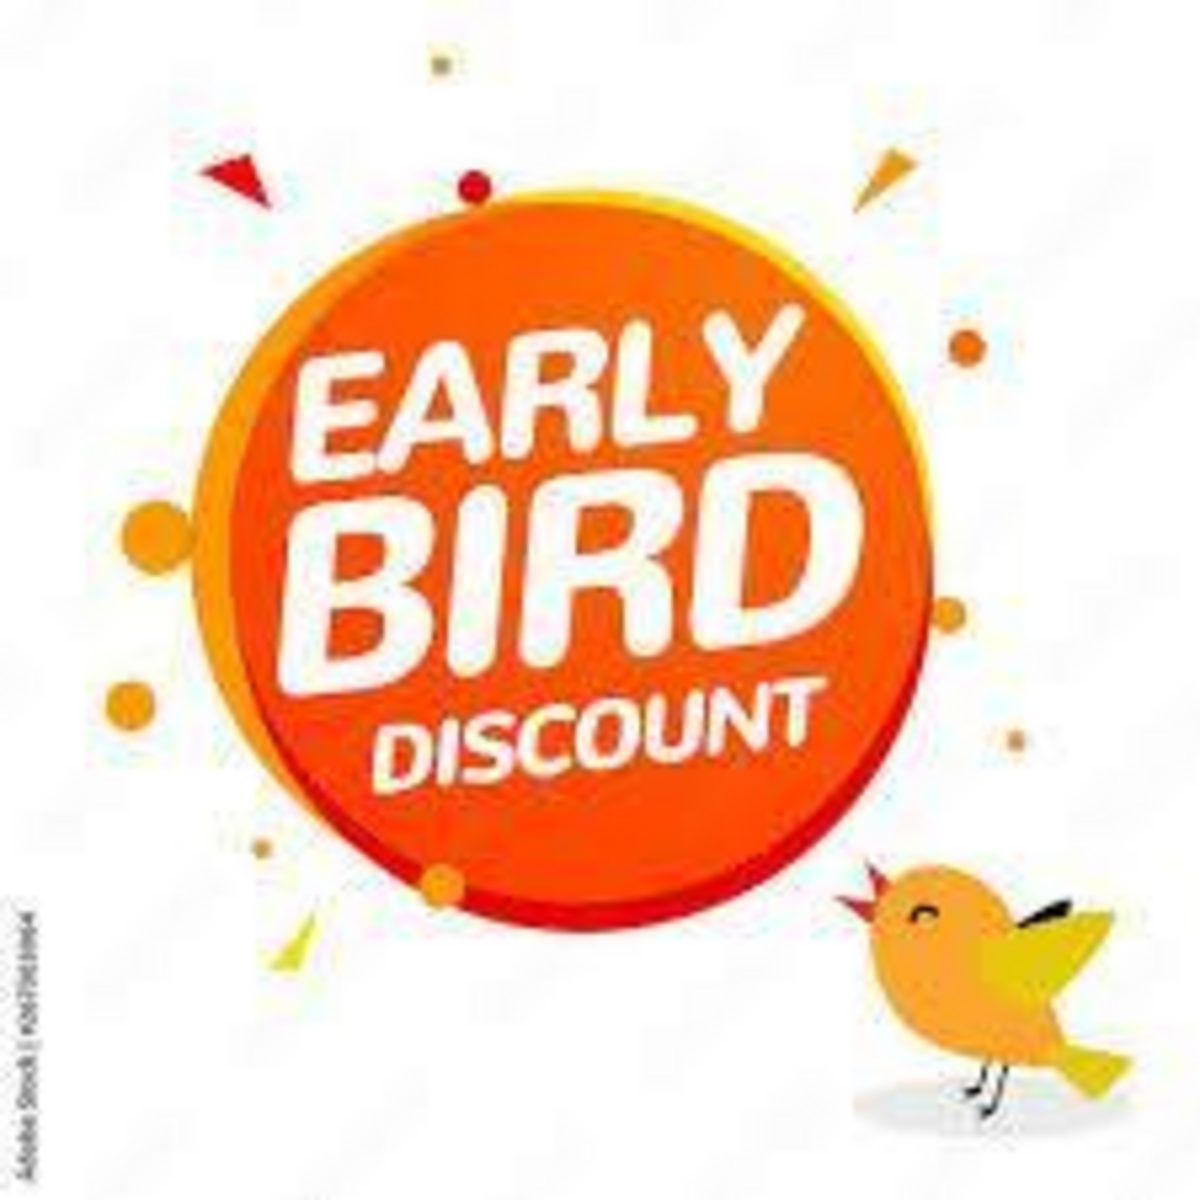 Early Bird Discount 10%